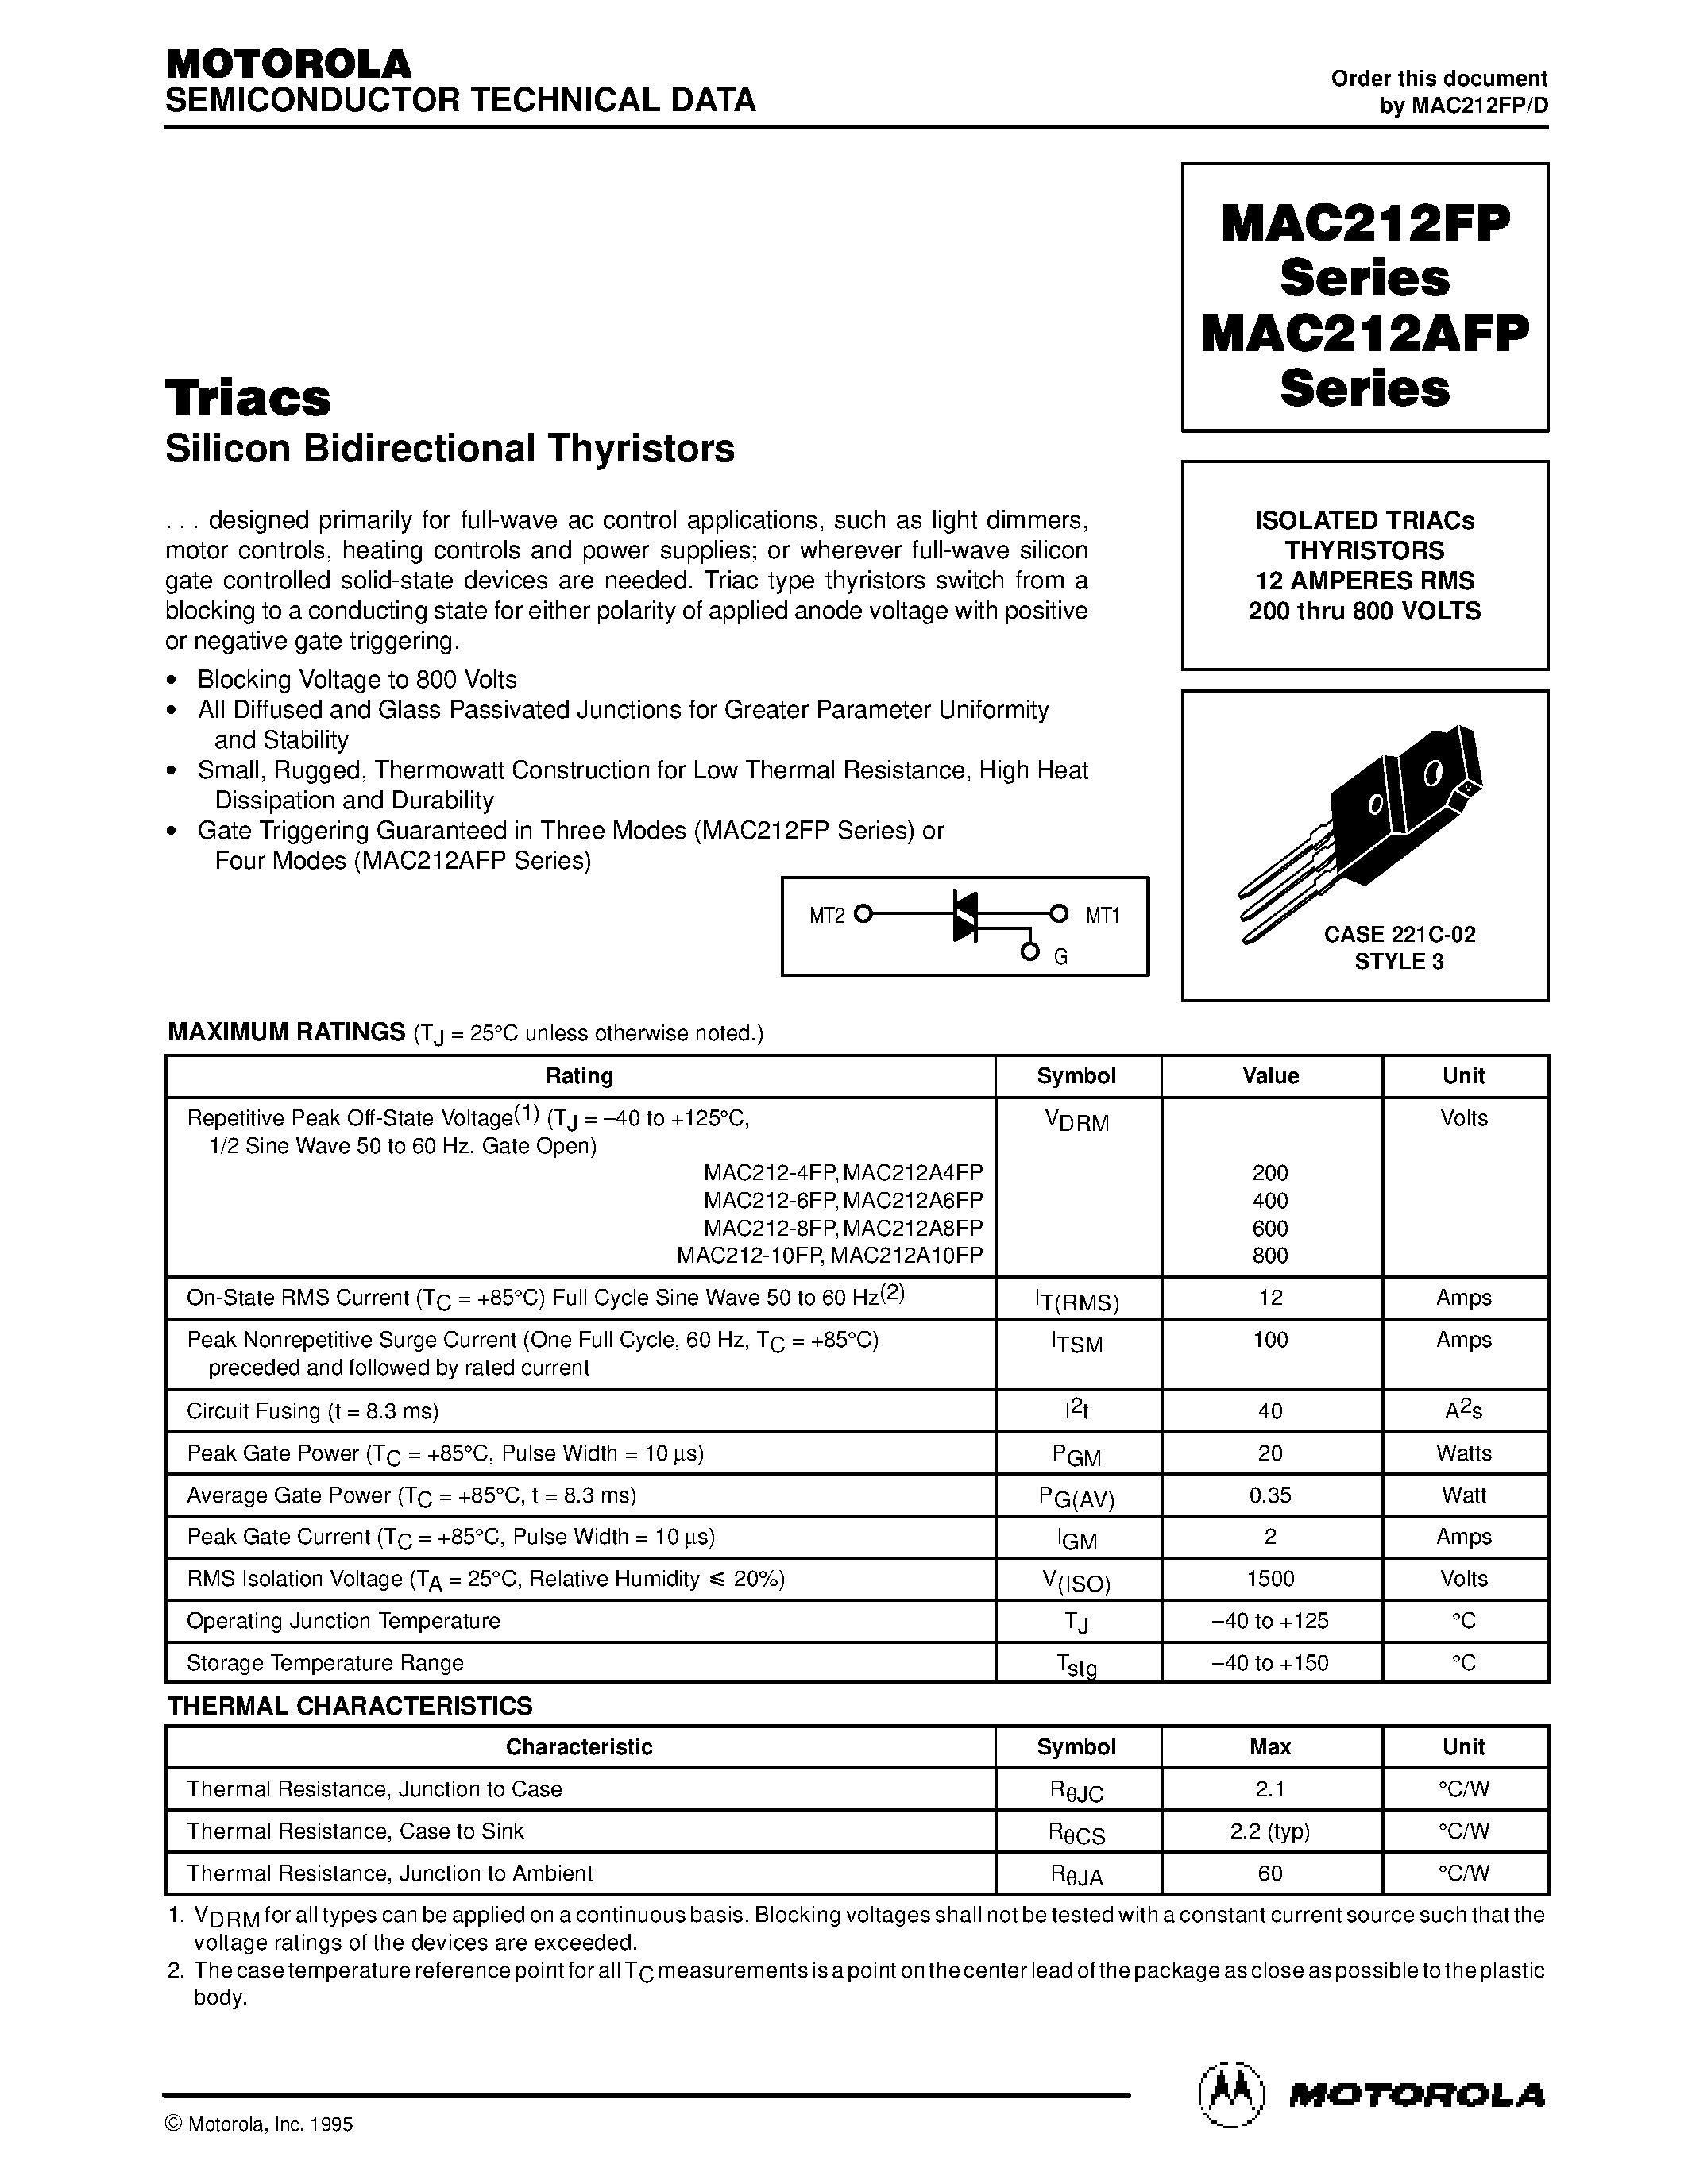 Даташит MAC212A10FP - ISOLATED TRIACs THYRISTORS 12 AMPERES RMS 200 thru 800 VOLTS страница 1